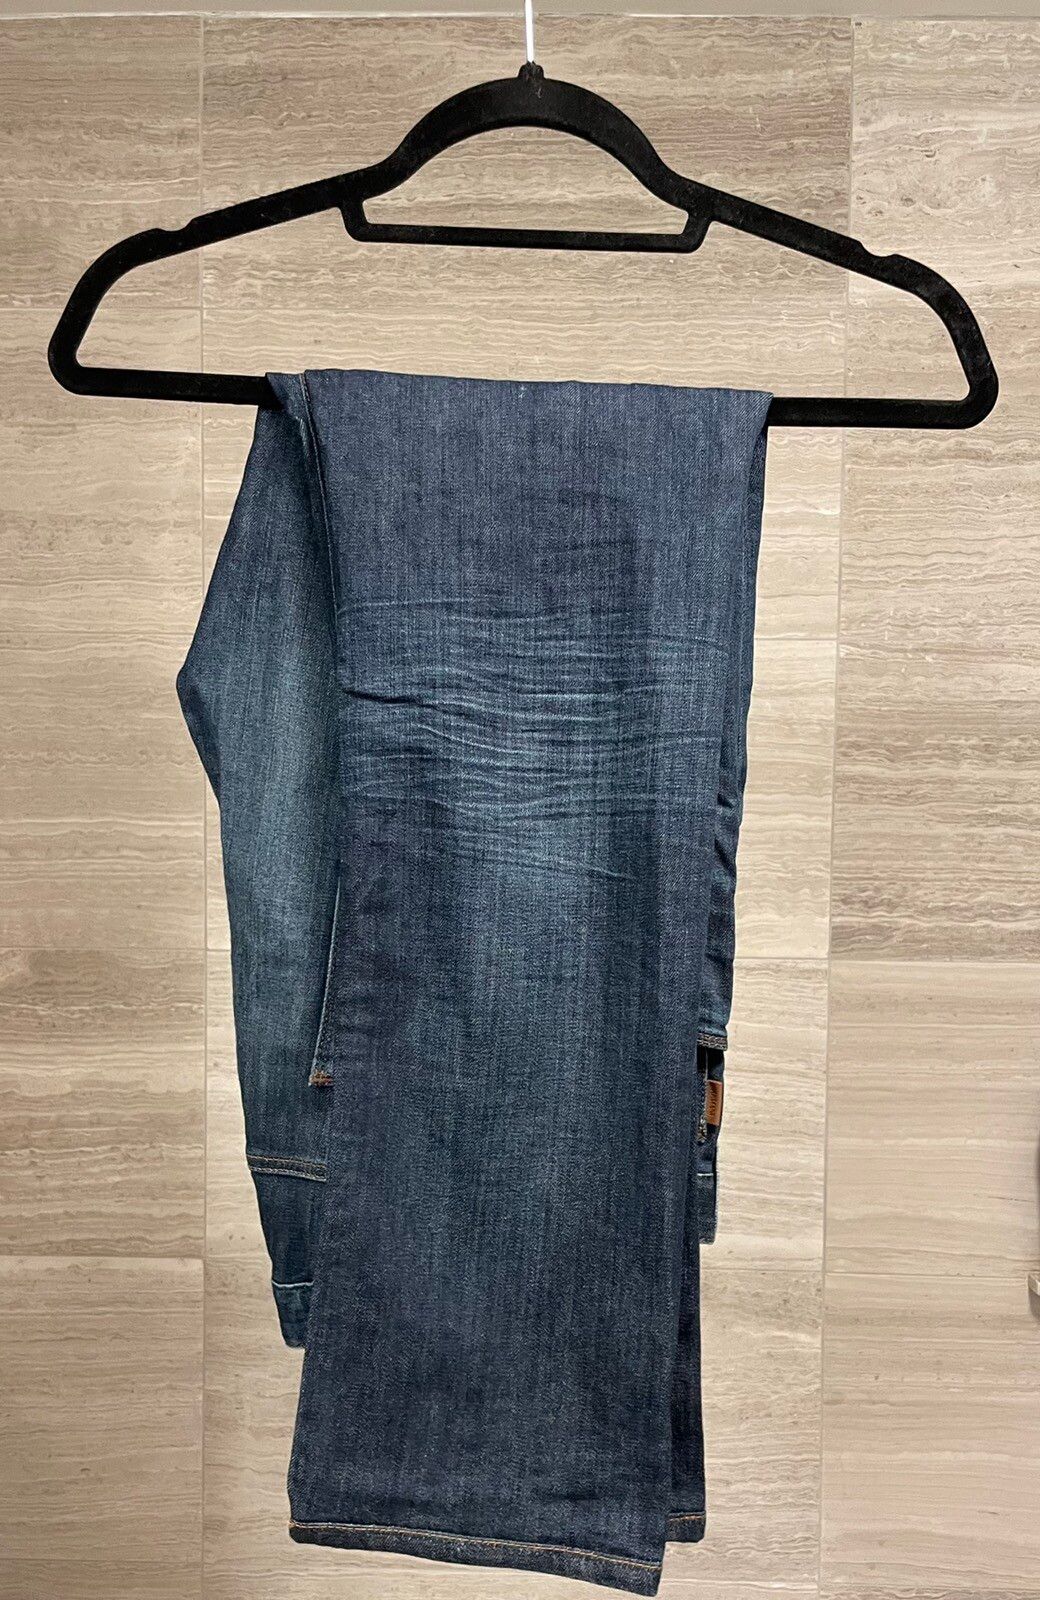 Armani Armani Slim Fit Blue Jeans Size 32/32 Size US 32 / EU 48 - 1 Preview